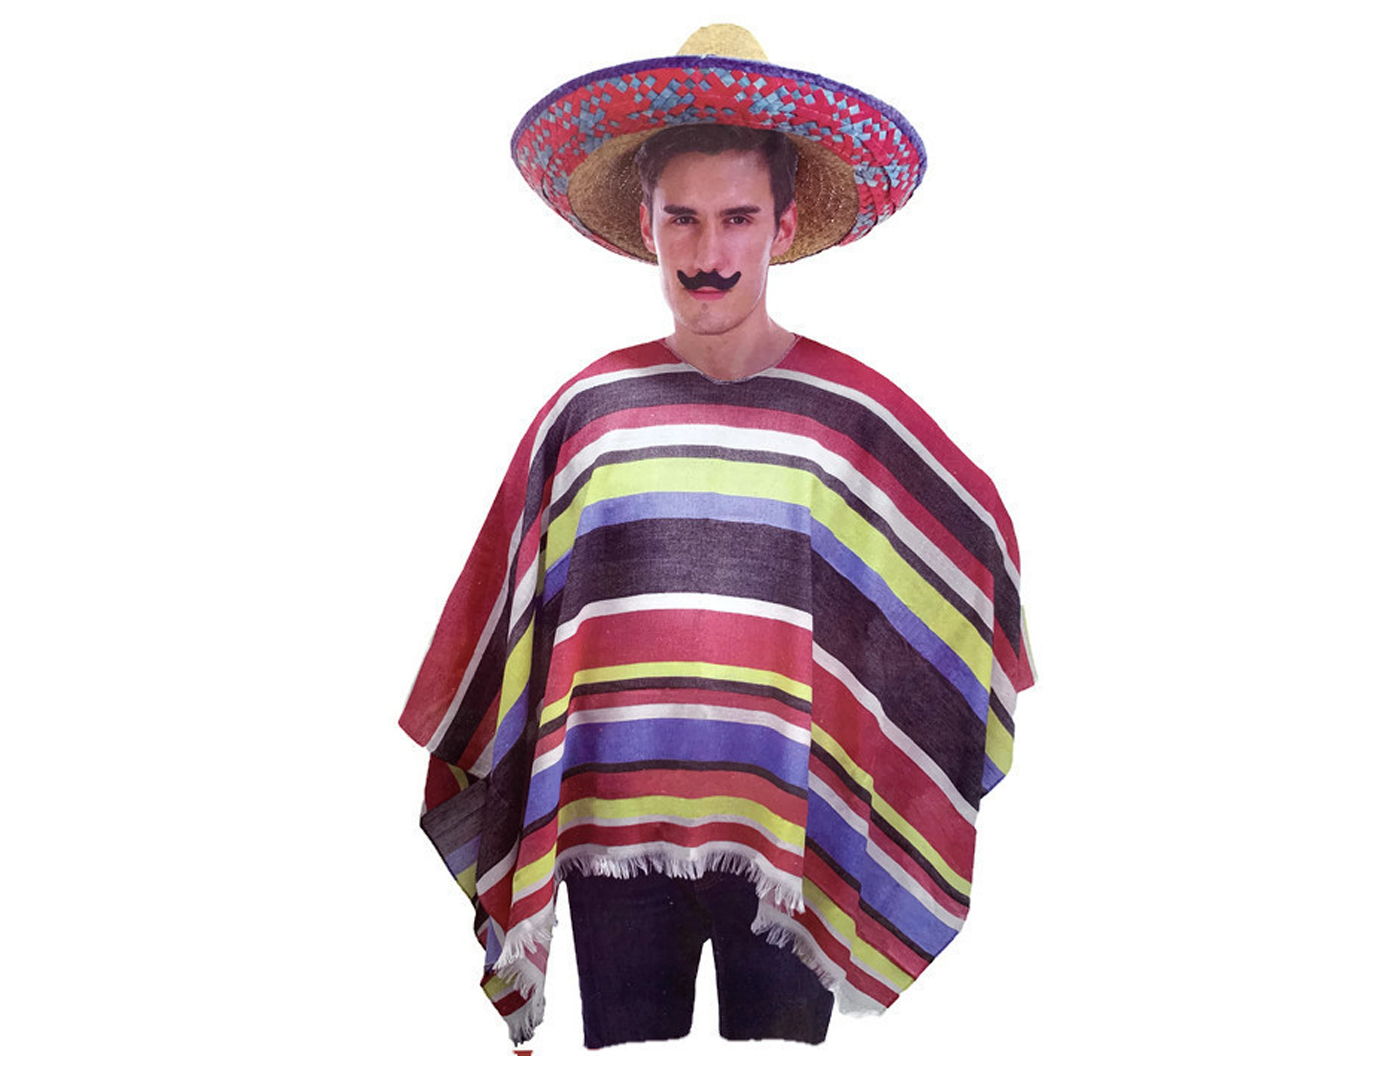 Mexican Poncho Costume | Catch.com.au